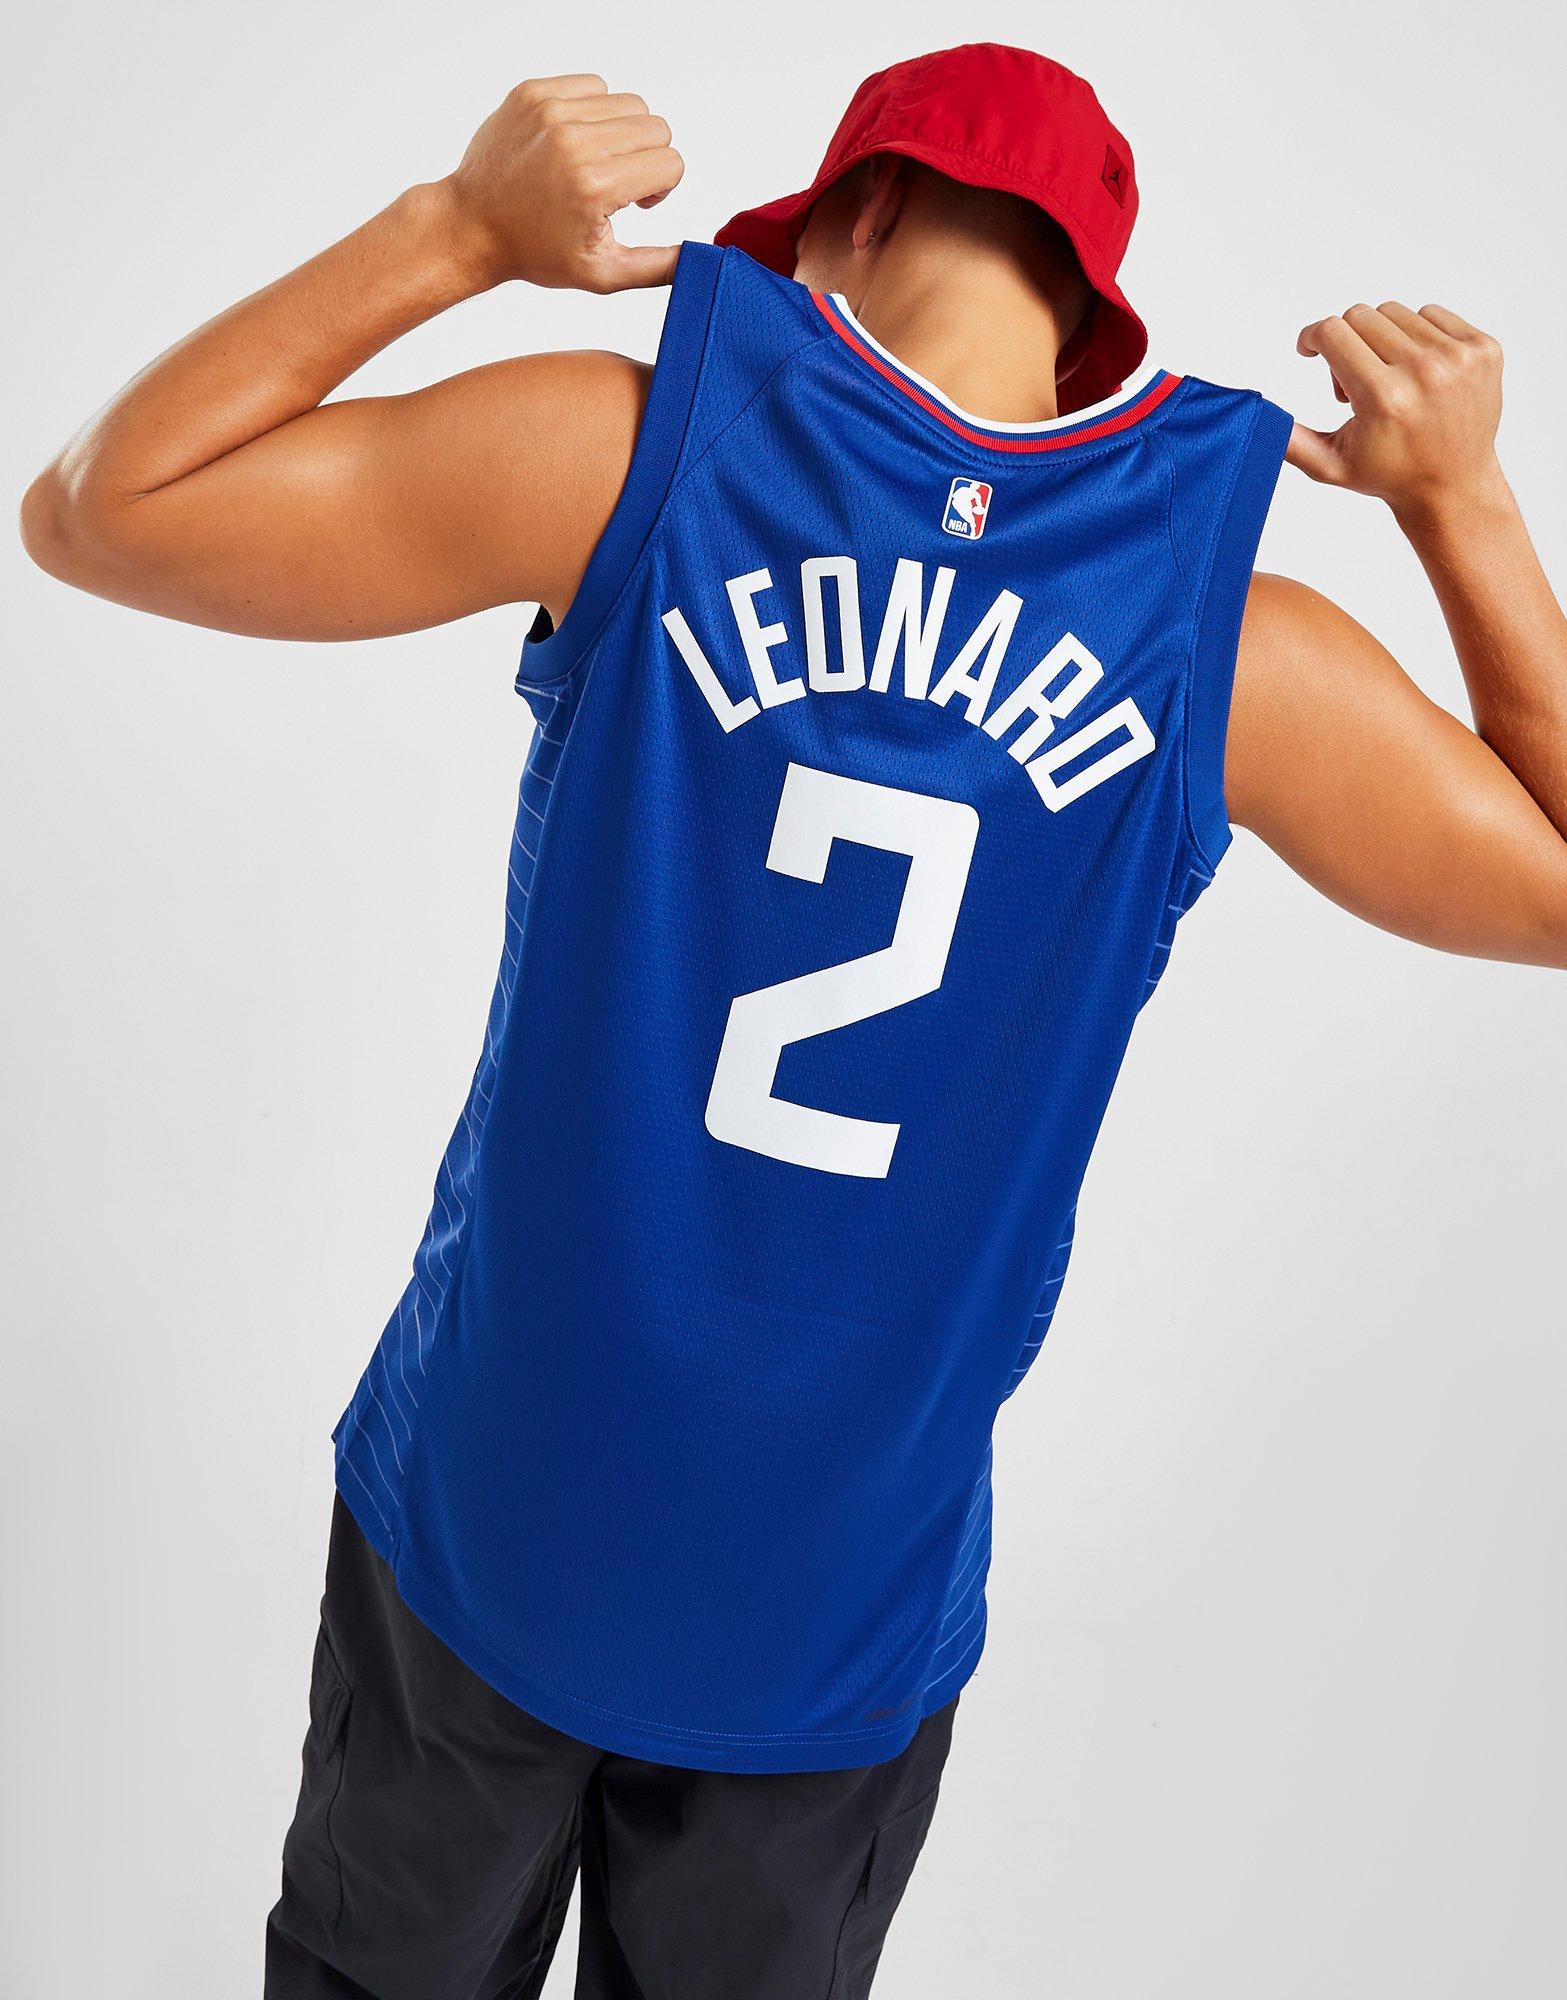 Buy NBA SWINGMAN JERSEY LOS ANGELES CLIPPERS KAWHI LEONARD ICON for N/A 0.0  on !